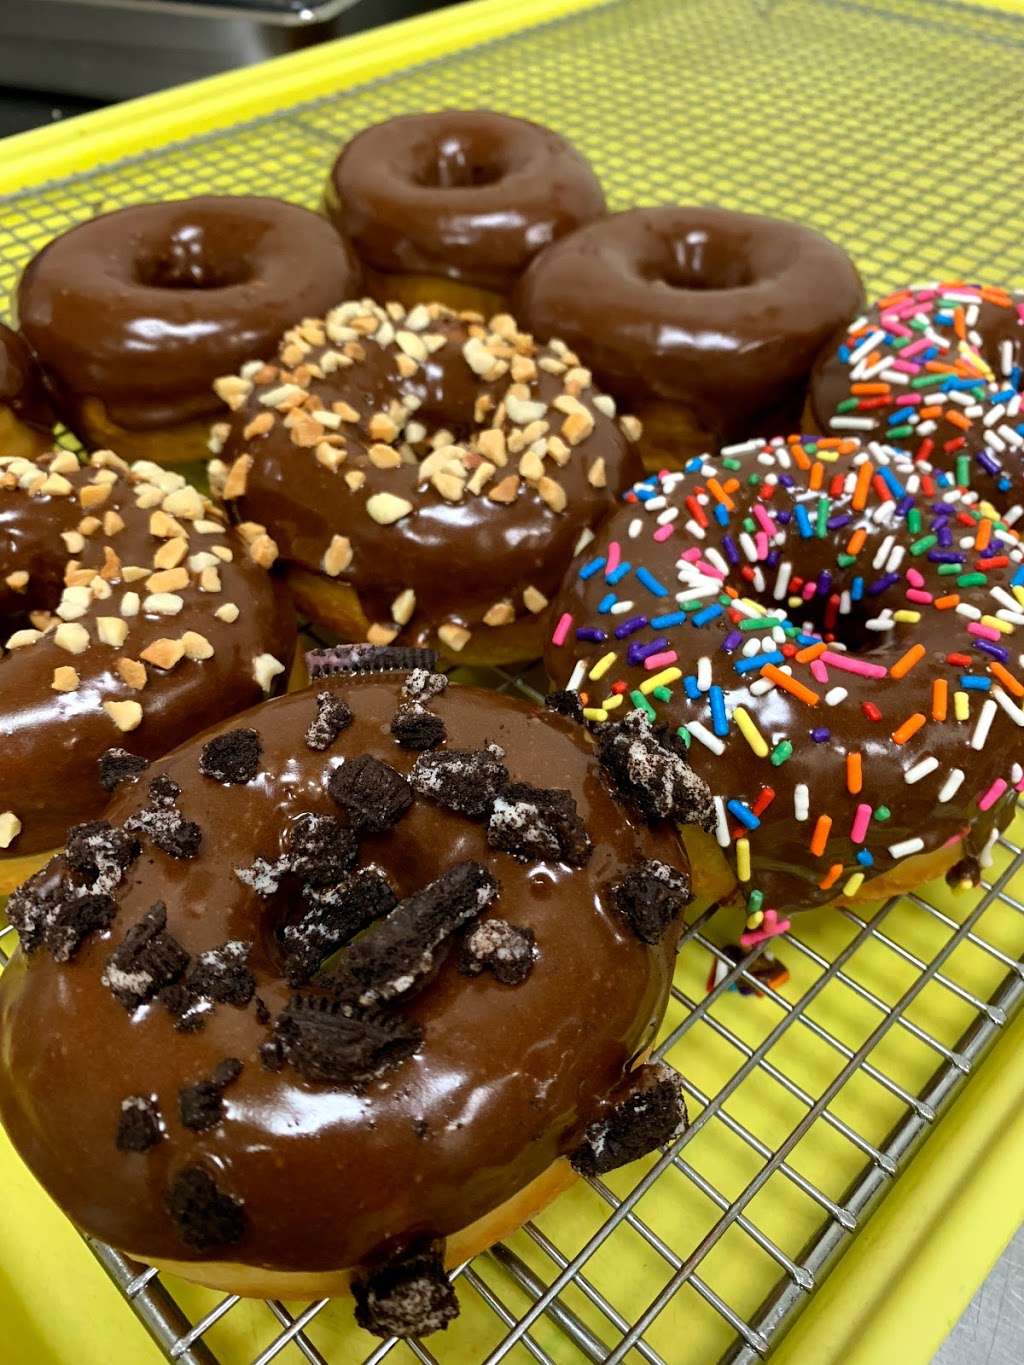 Star Box Donuts | 17113 Westheimer Rd, Houston, TX 77082, USA | Phone: (281) 242-9273